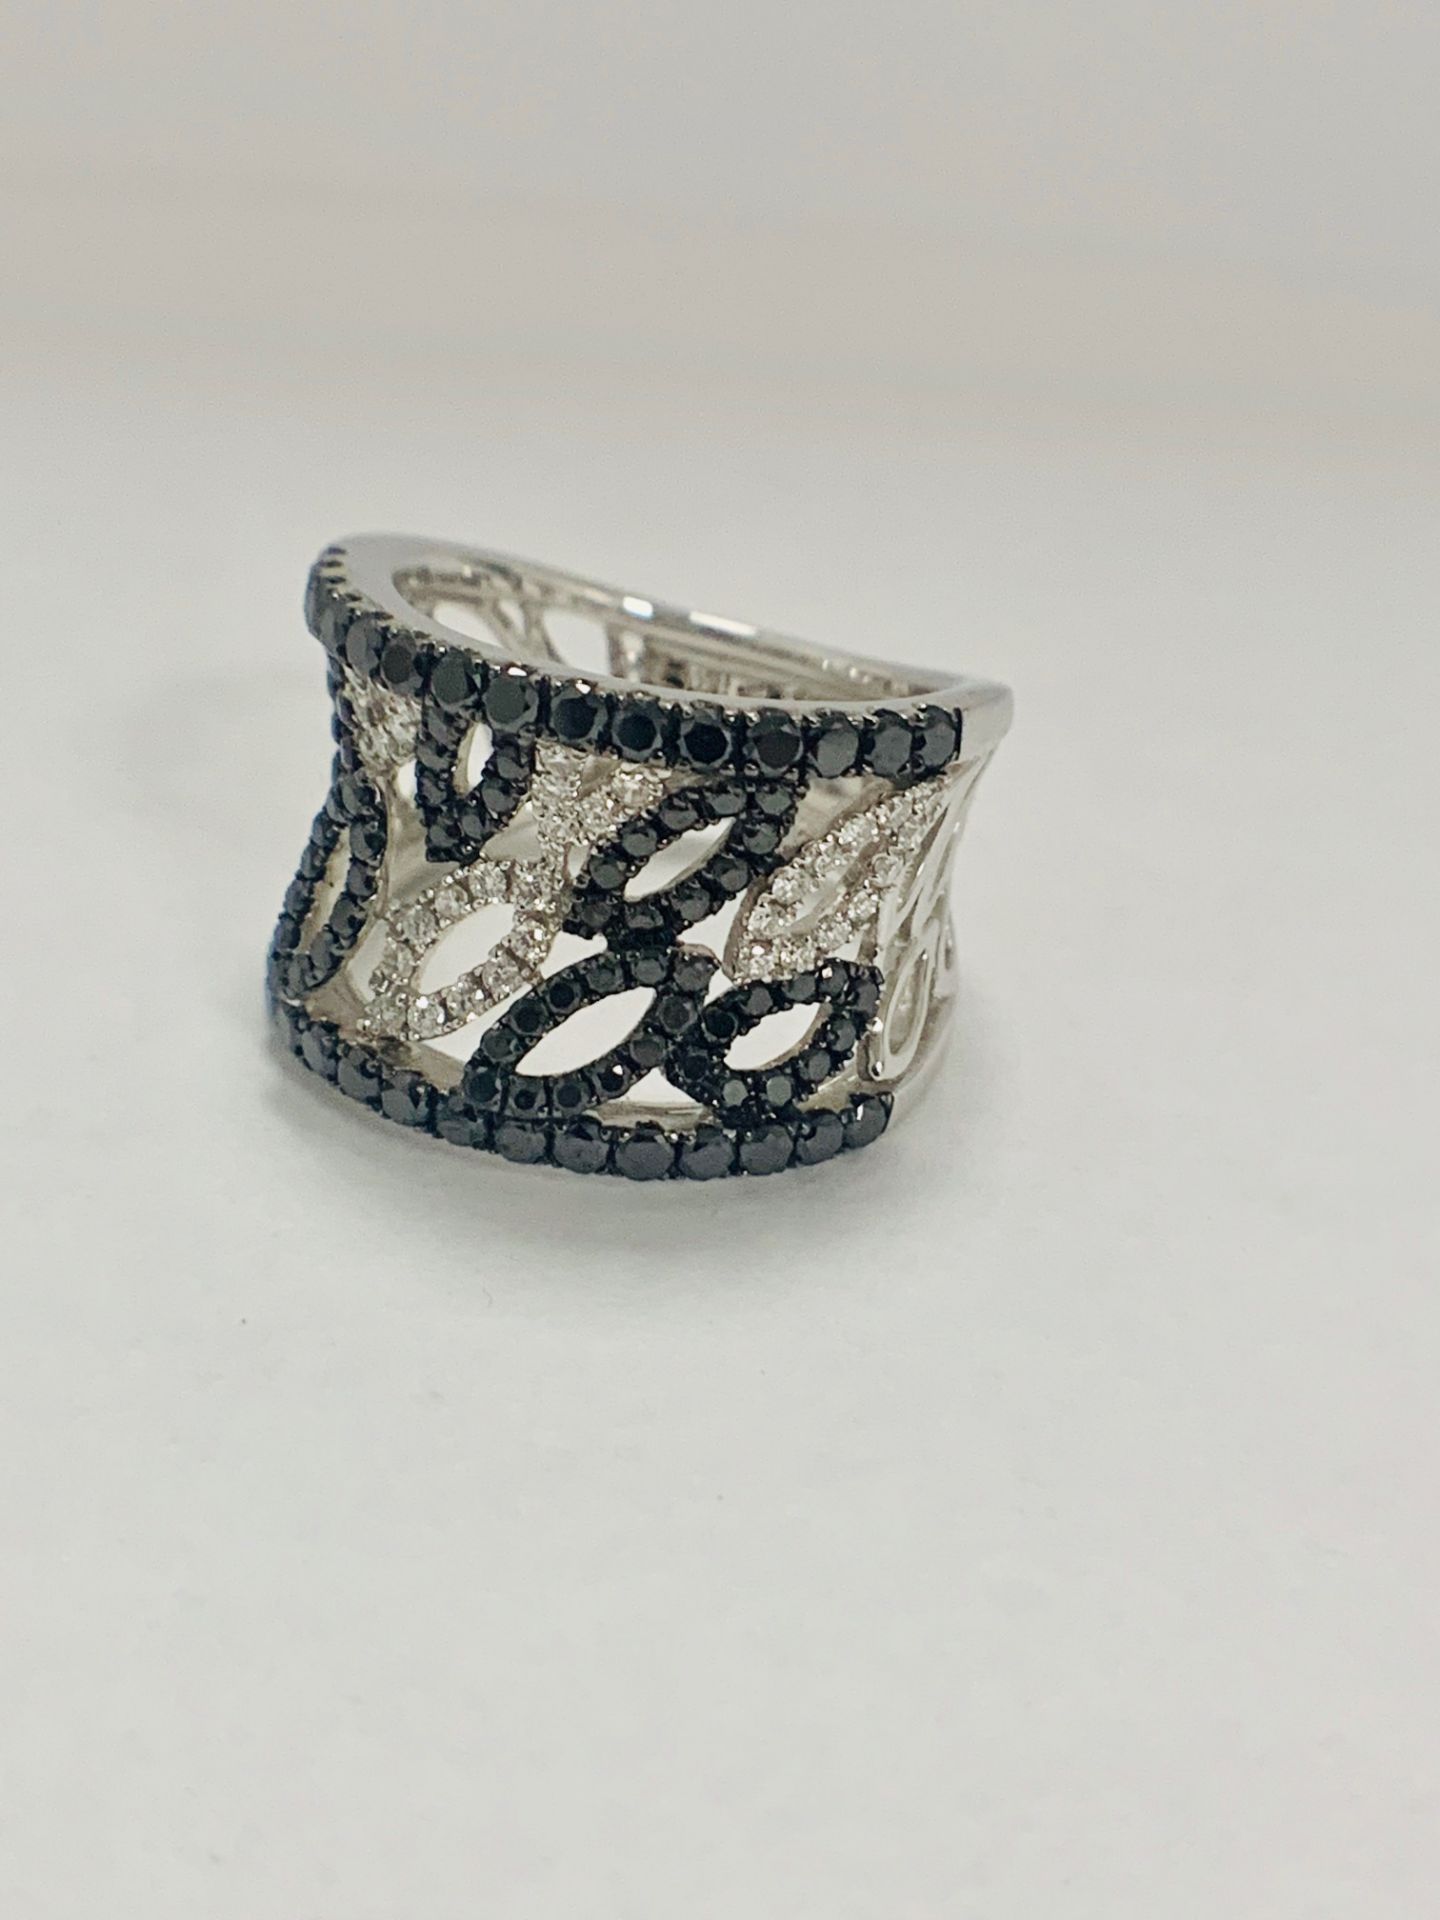 18ct White Gold Diamond Ring featuring 90 Round Cut, Black Diamonds (1.14ct TBDW) - Image 5 of 15